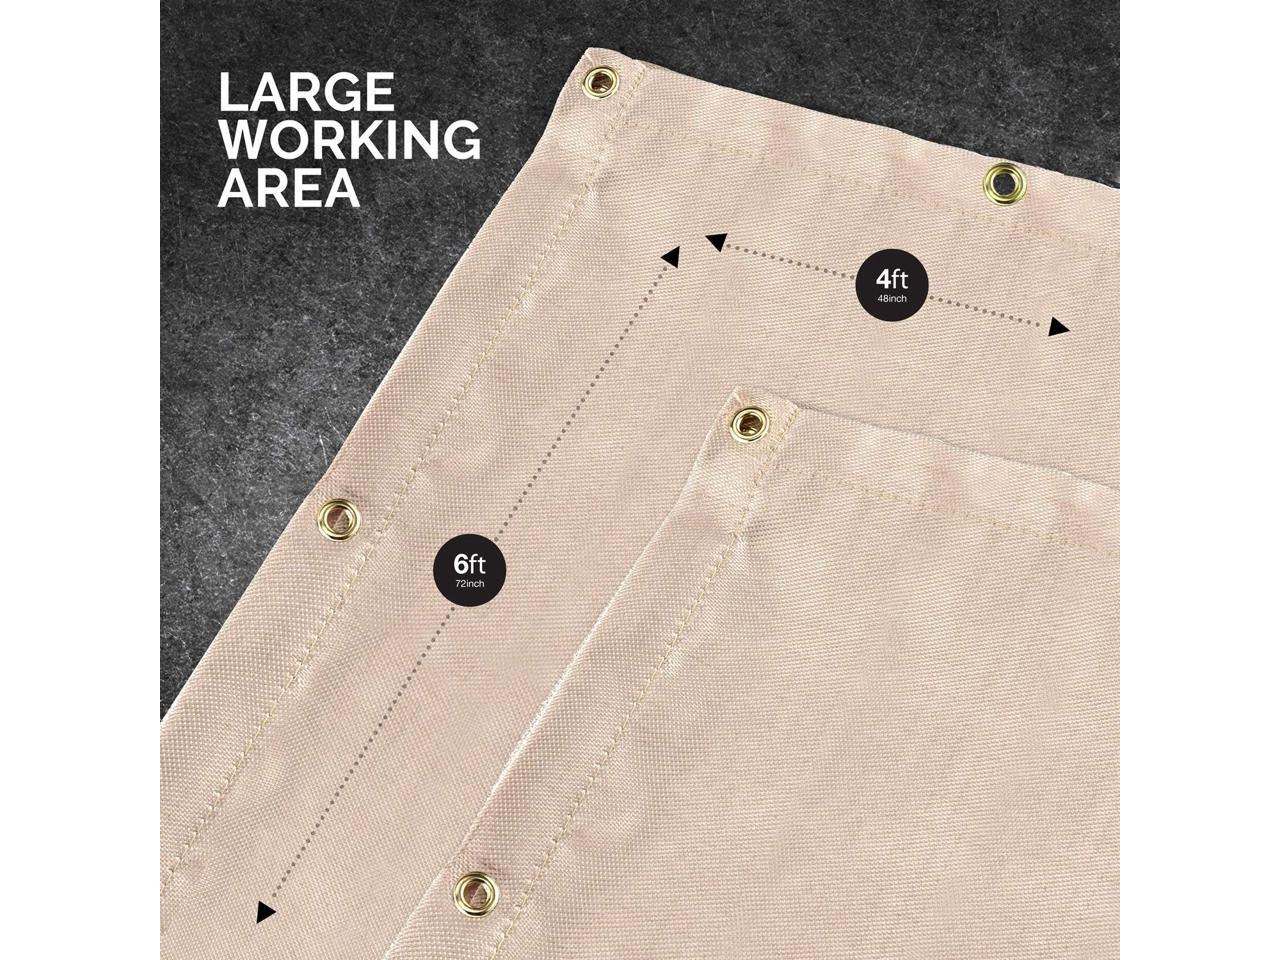 Neiko?10908A Fiberglass Welding Blanket Rated at 1000?/537á“ 6 x 8 Feet with Grommets by Ridgerock Tools Inc. 